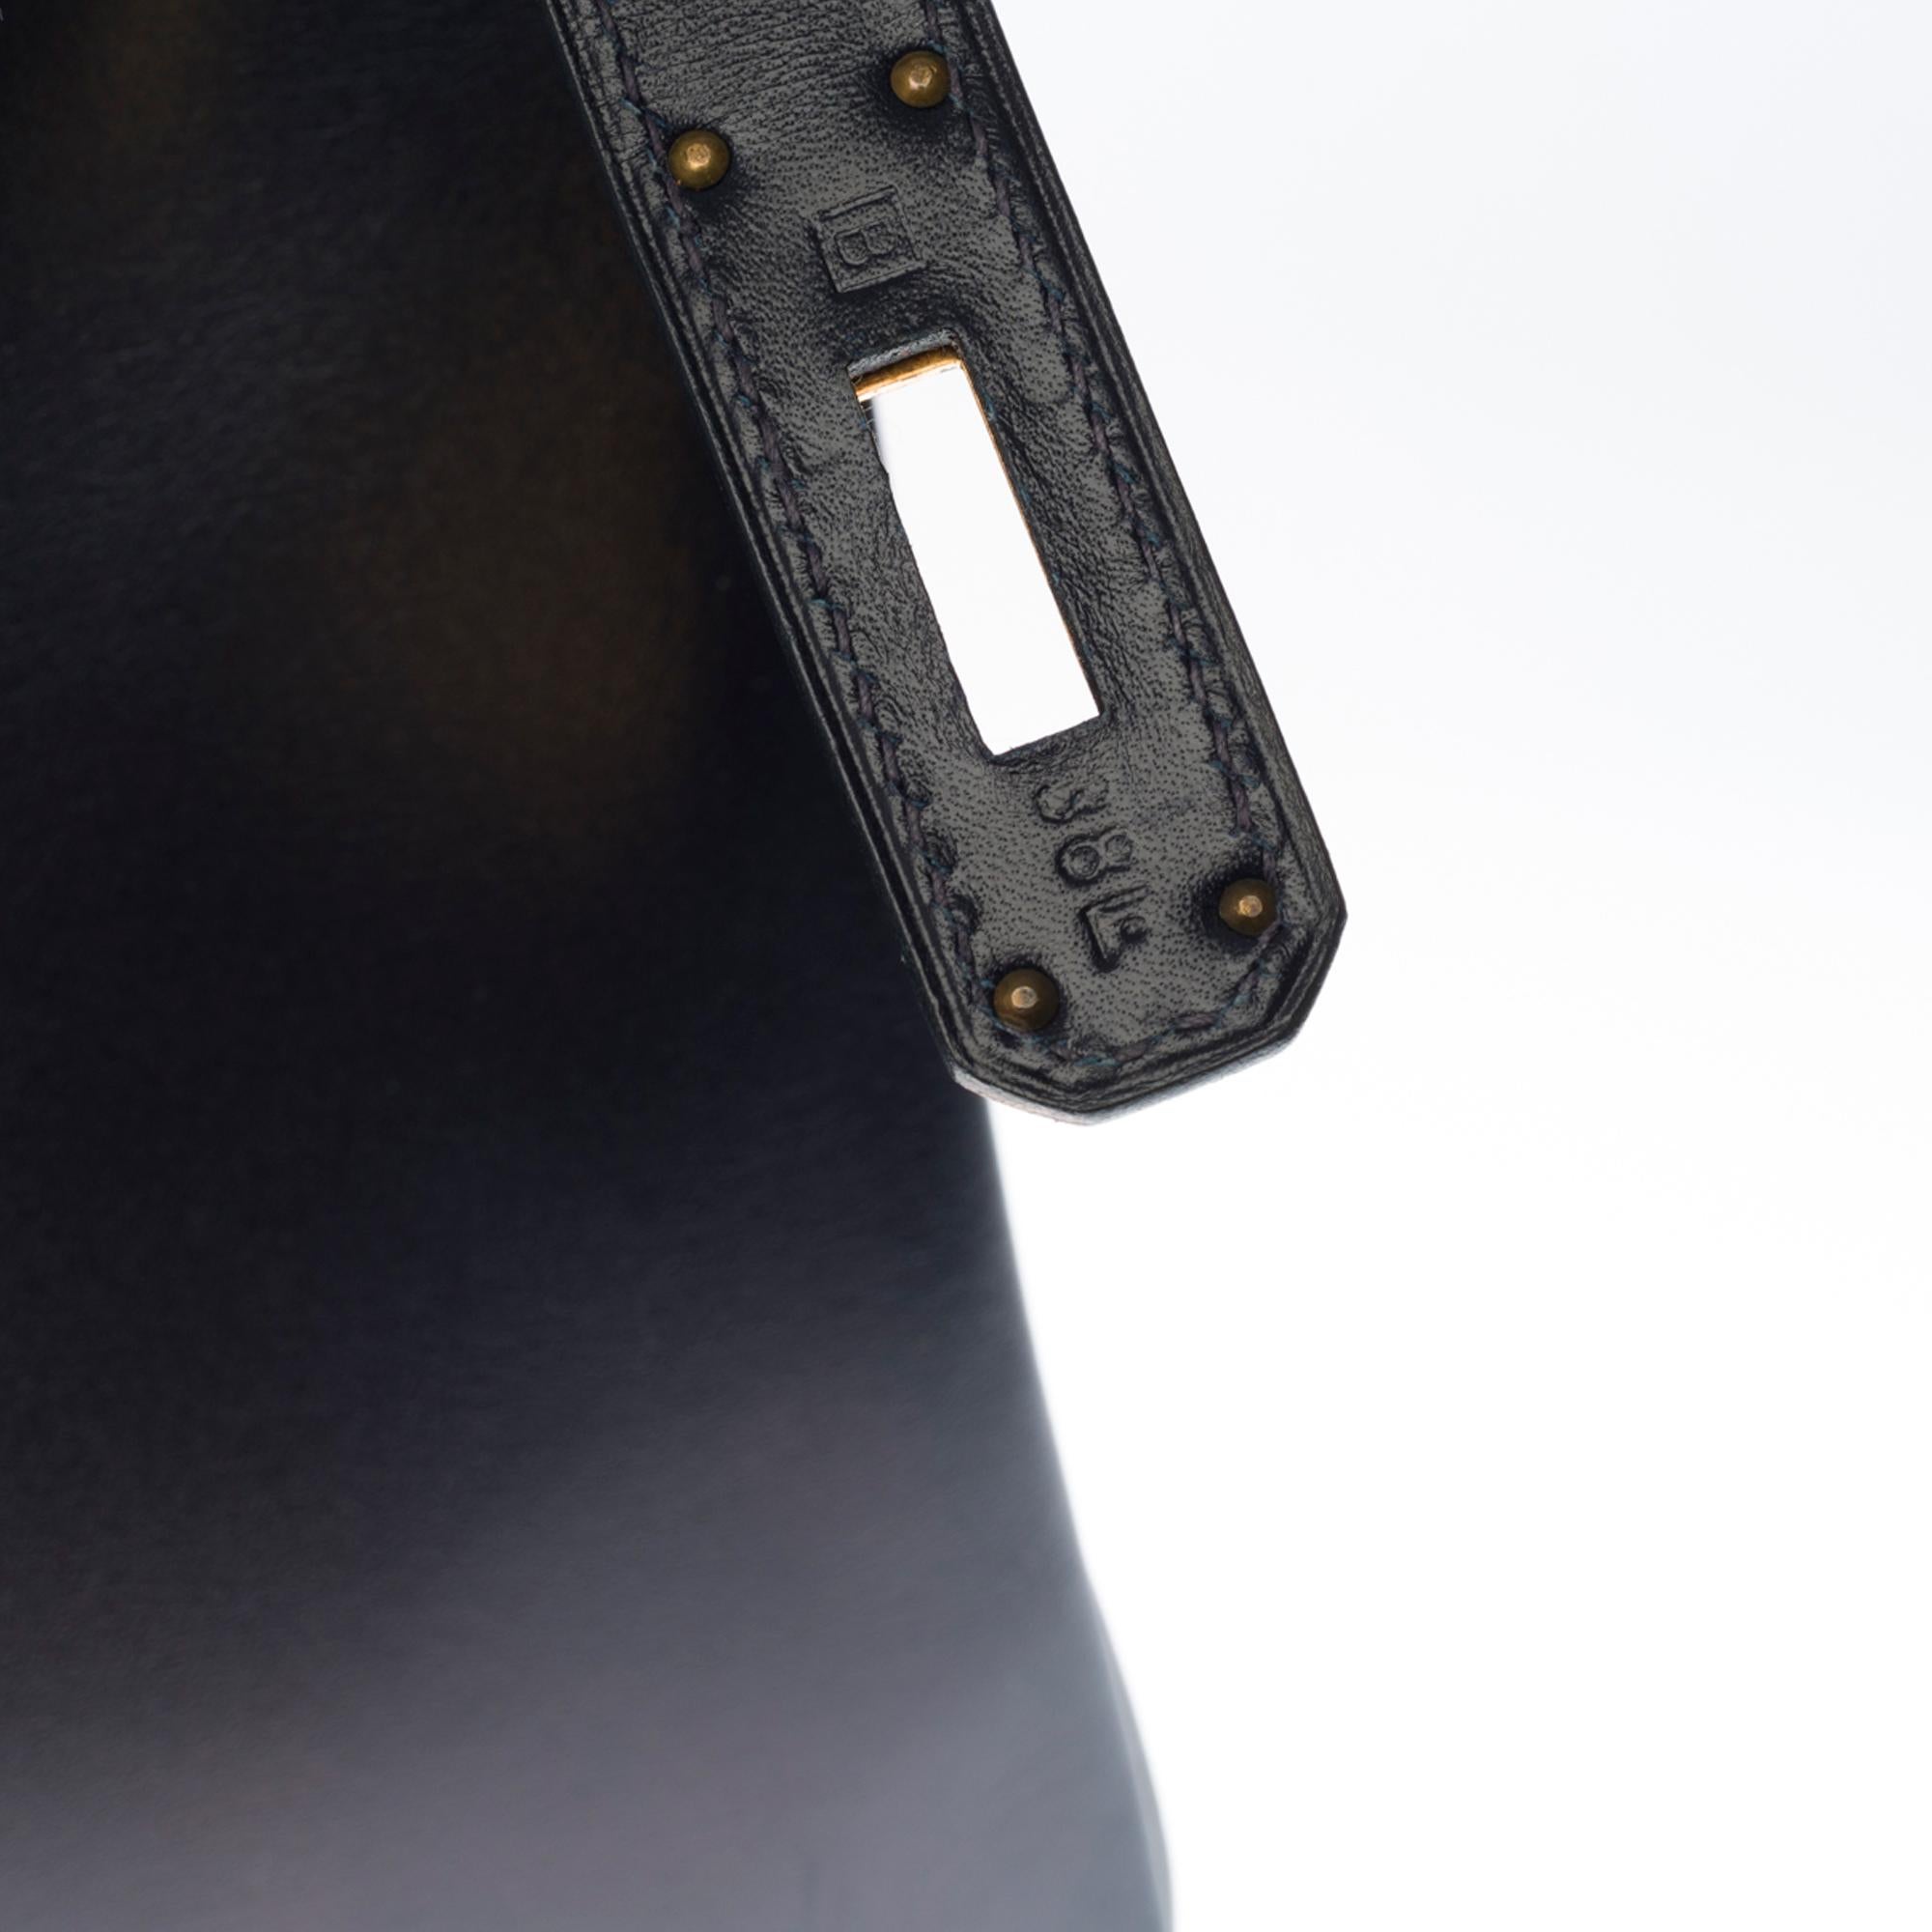 Black Hermès Kelly 32 retourné handbag with strap in Navy blue calf leather, GHW For Sale